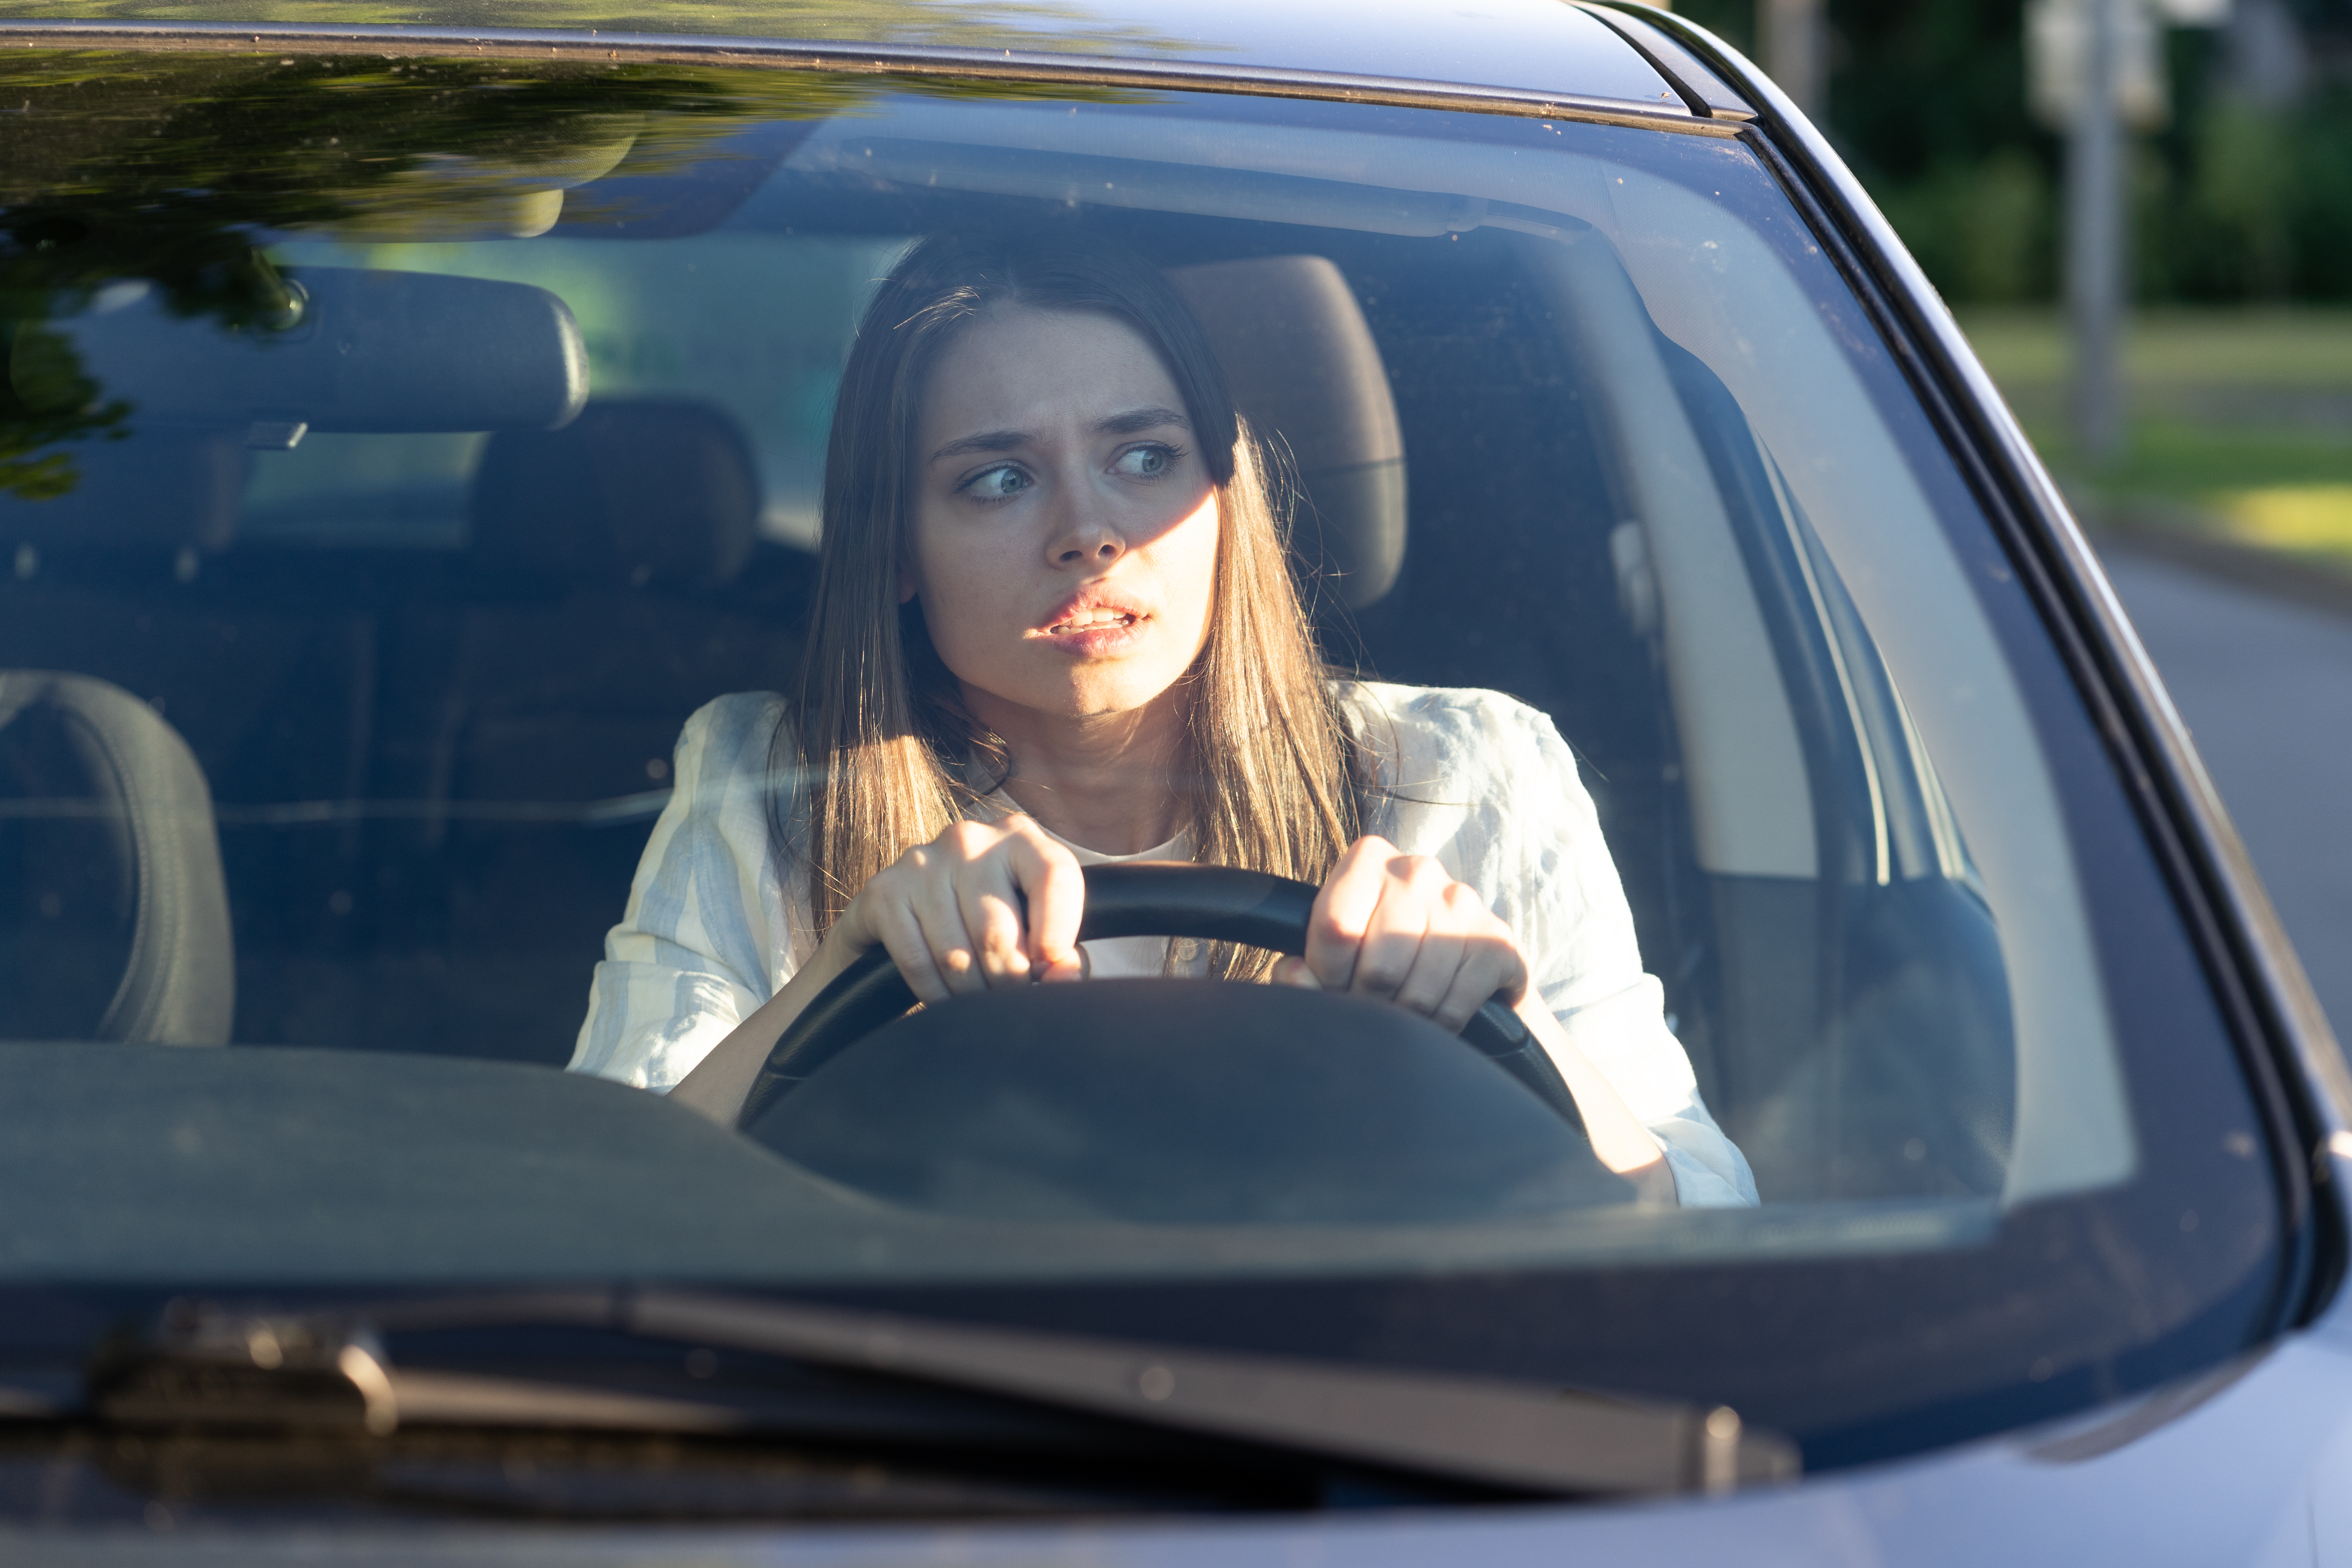 Woman drives her car | Source: Shutterstock